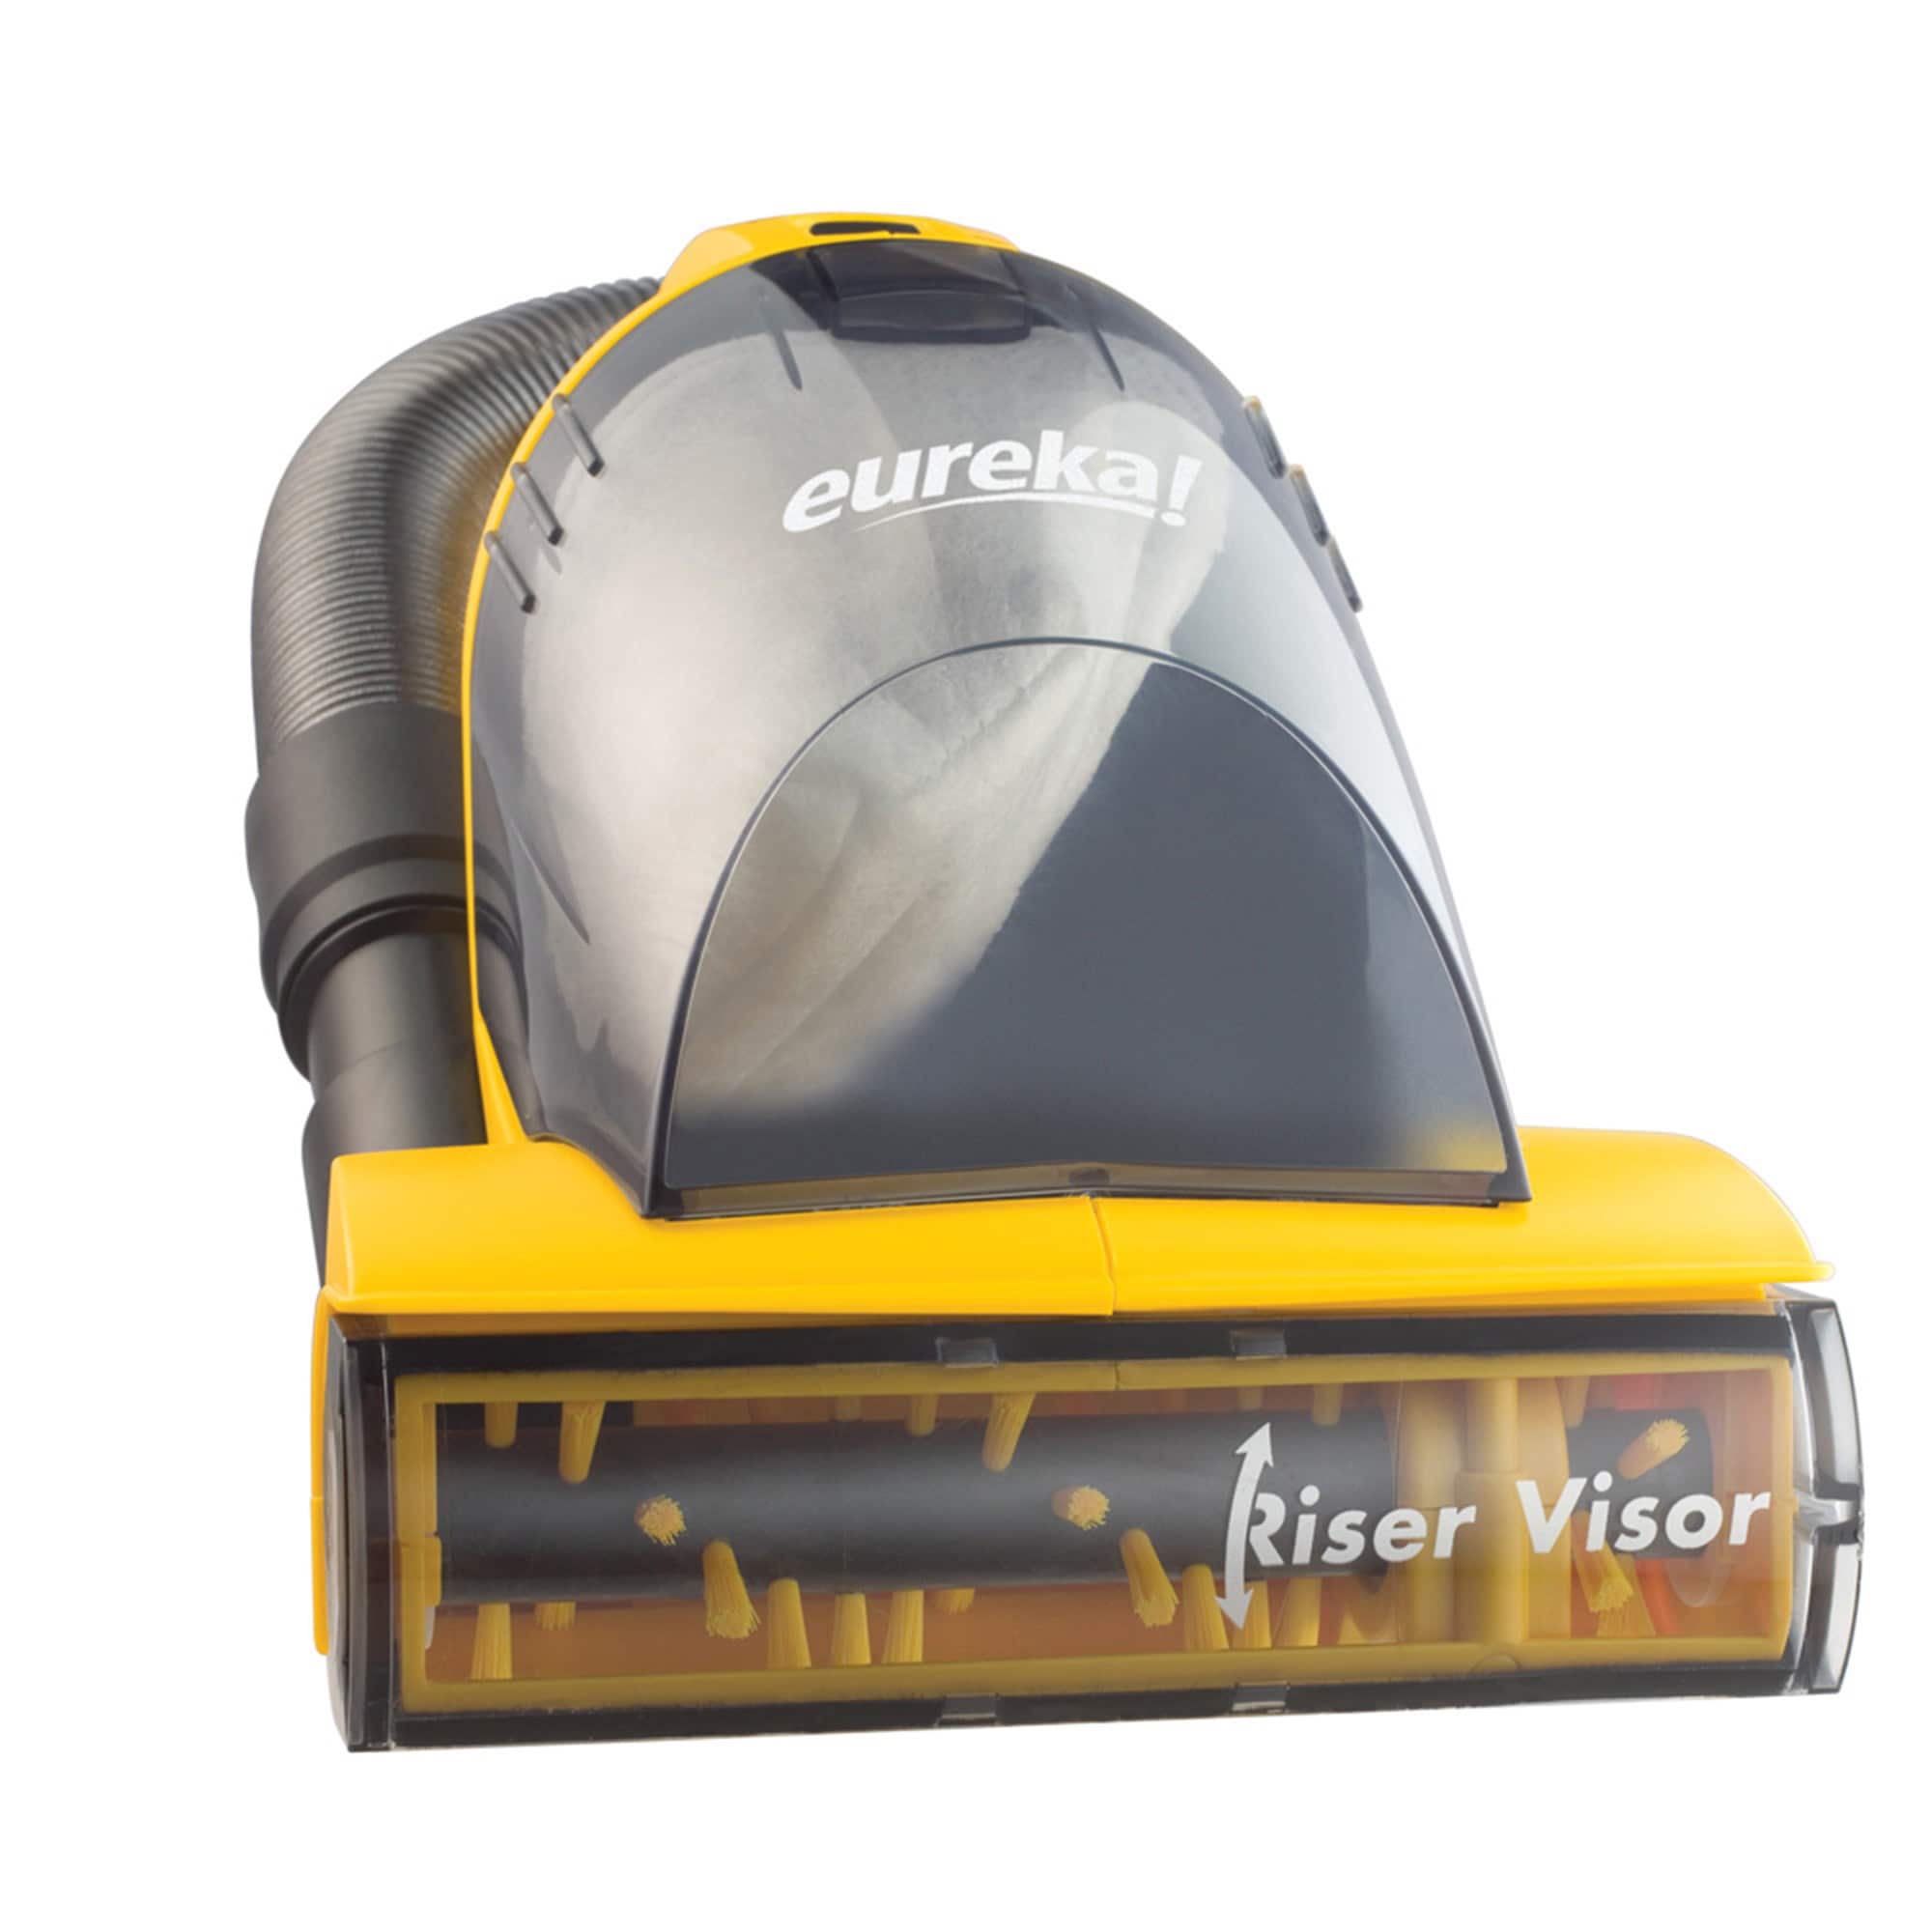 Eureka Easy Clean 120-Volt Corded Handheld Vacuum at